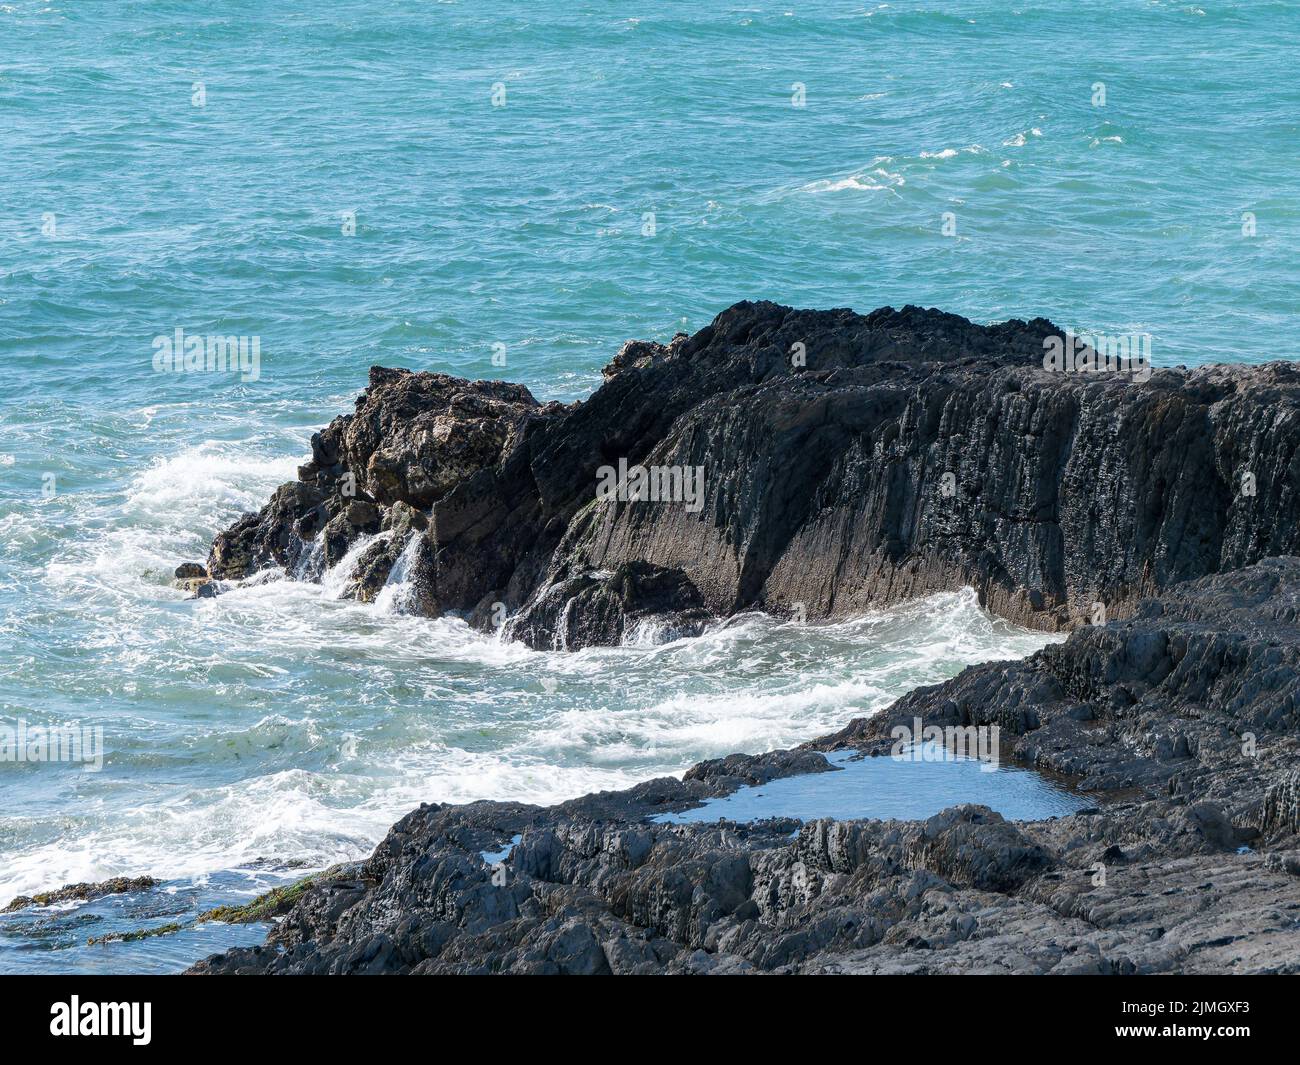 Tidal waves break on black coastal rocks, seascape. The water is turquoise in color. White foam on the waves, splashes, rock beside sea. Stock Photo